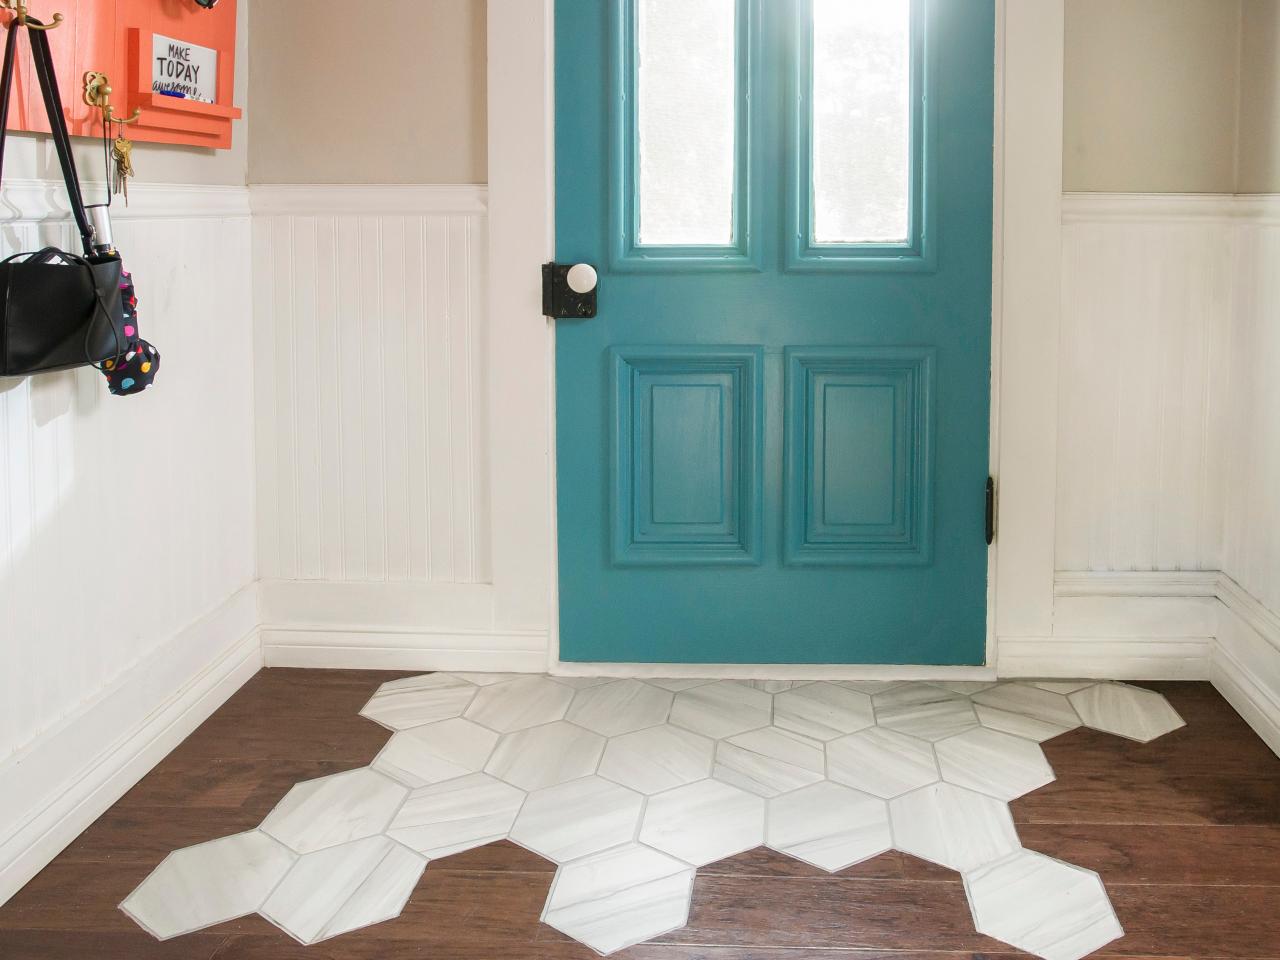 A Tile Rug Within Hardwood Floor, Wood And Tile Floor